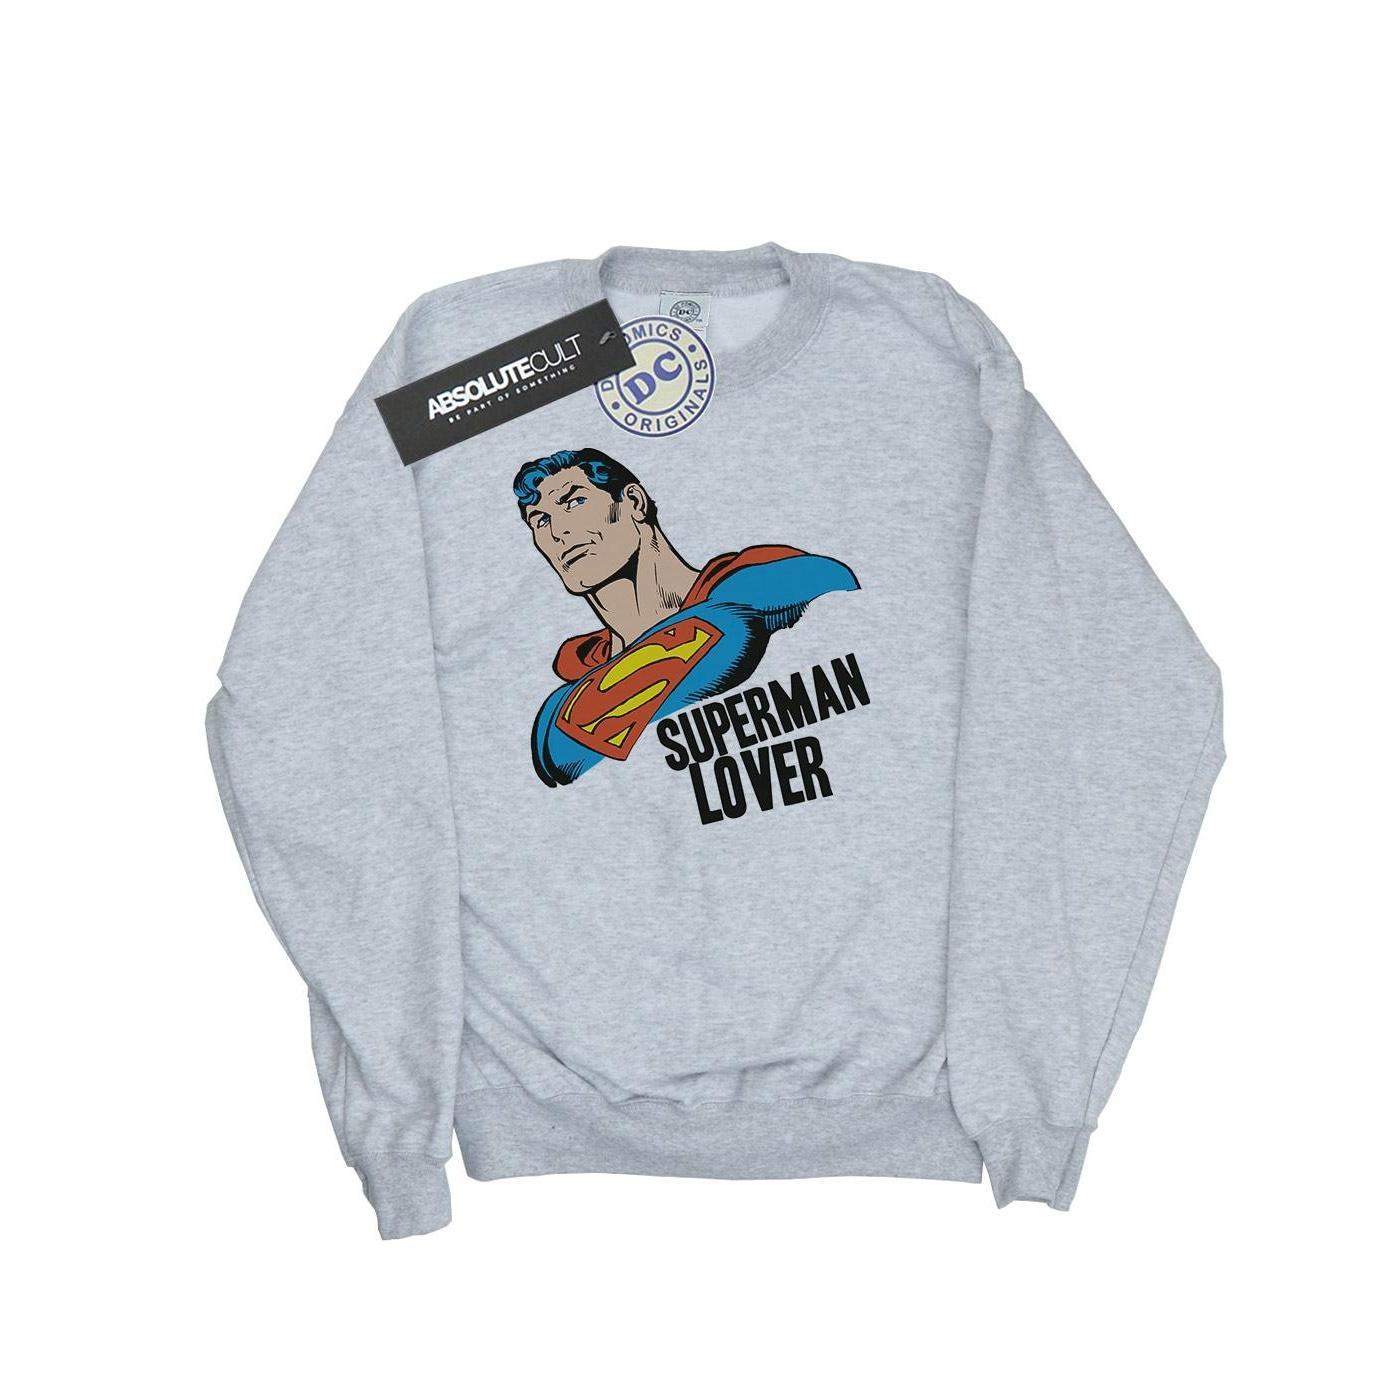 DC Comics Girls Superman Lover Sweatshirt (Sports Grey) (7-8 Years)